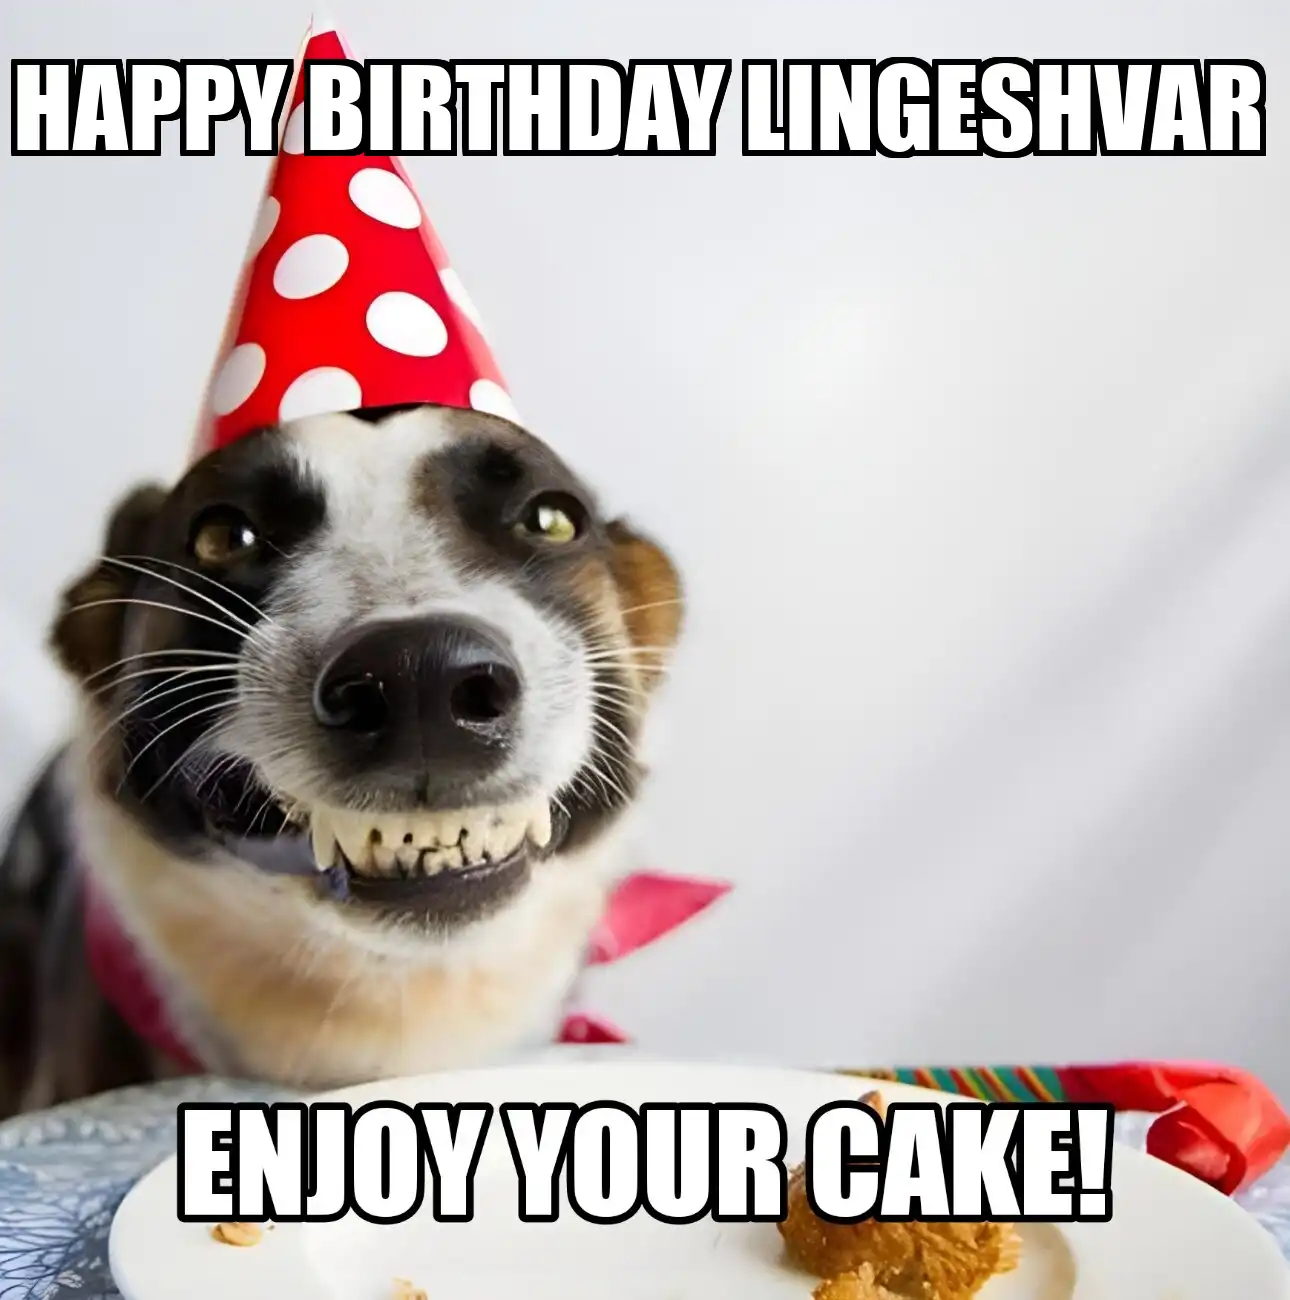 Happy Birthday Lingeshvar Enjoy Your Cake Dog Meme